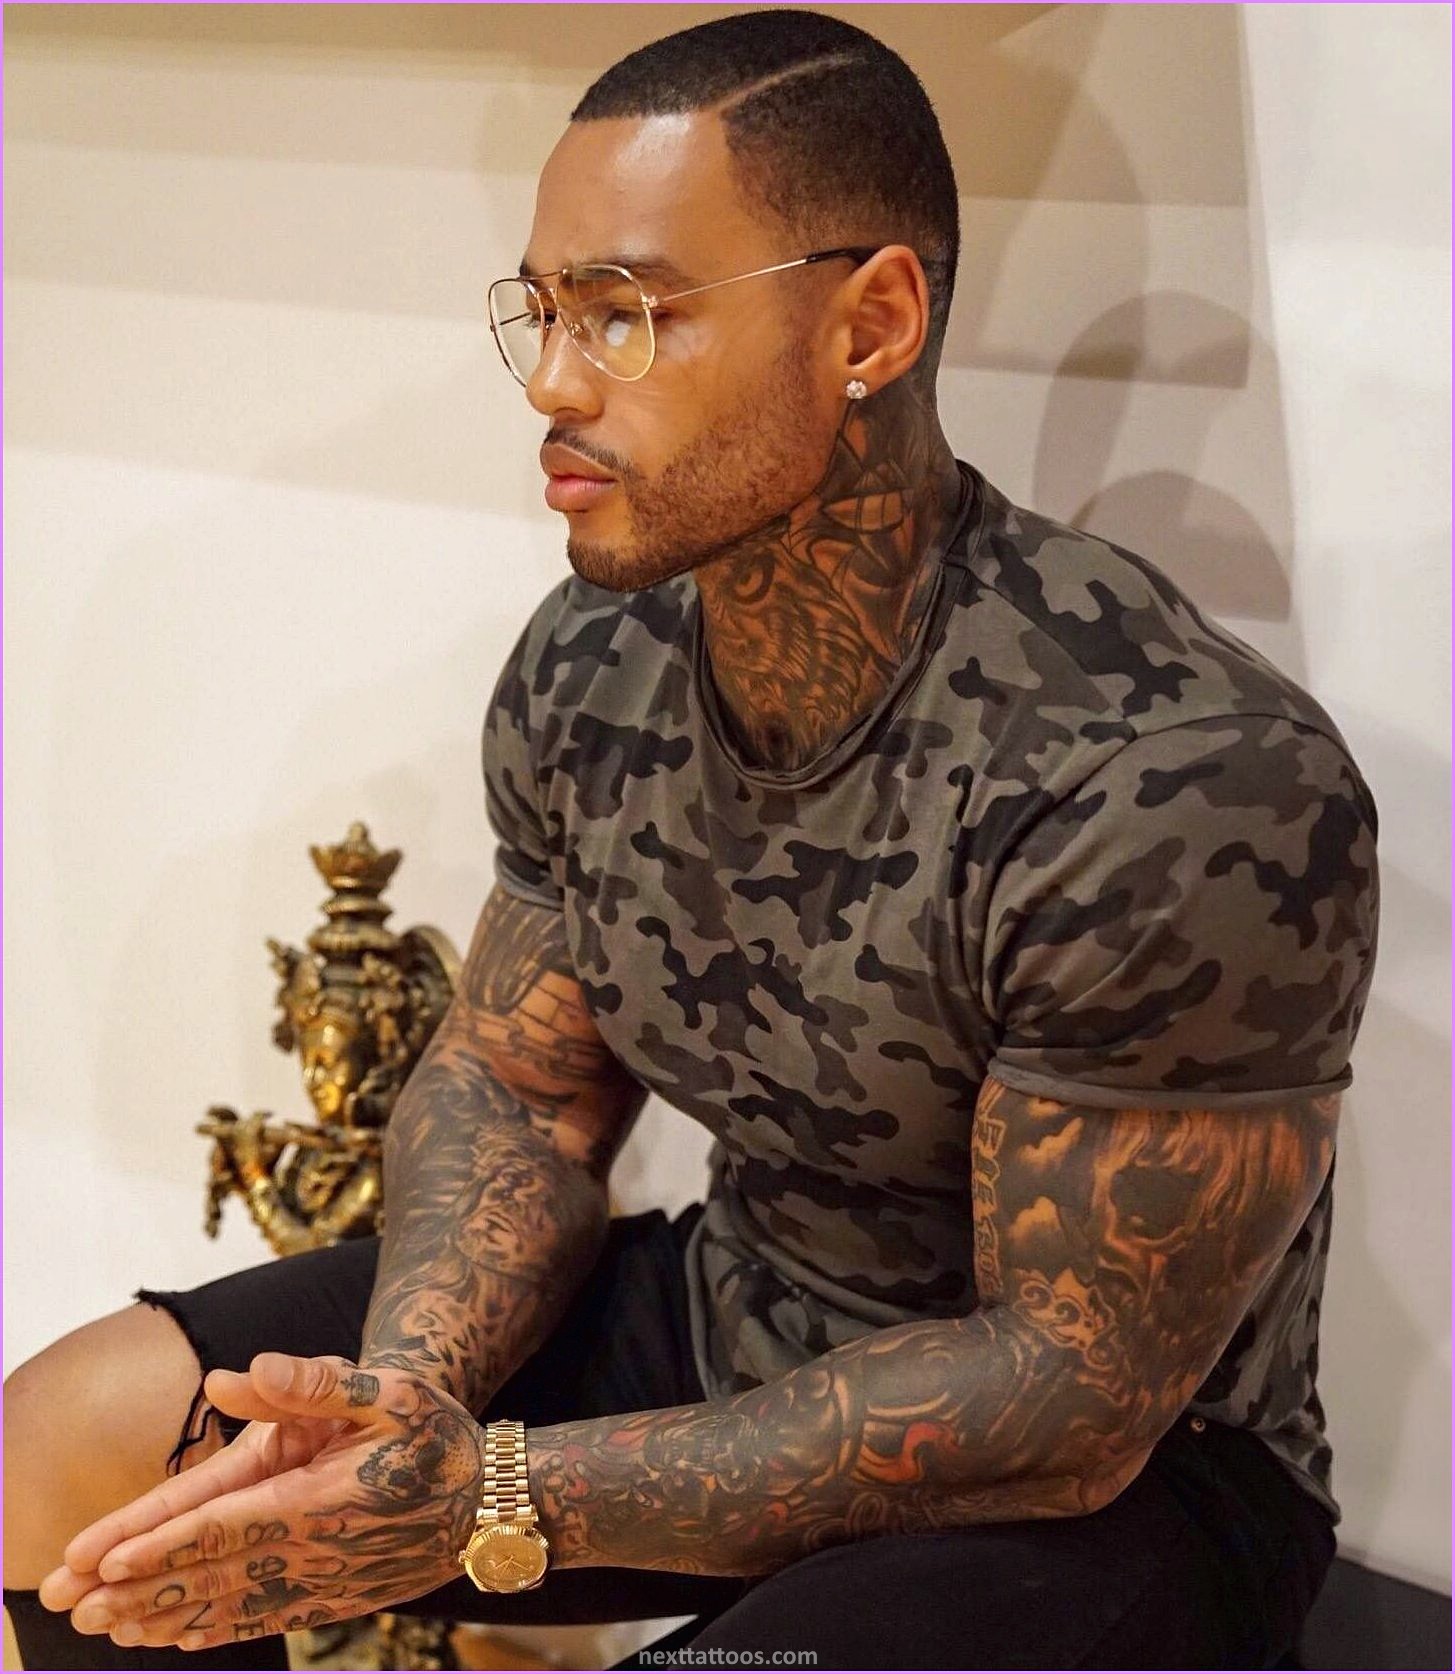 Choosing Black Male Tattoos Designs